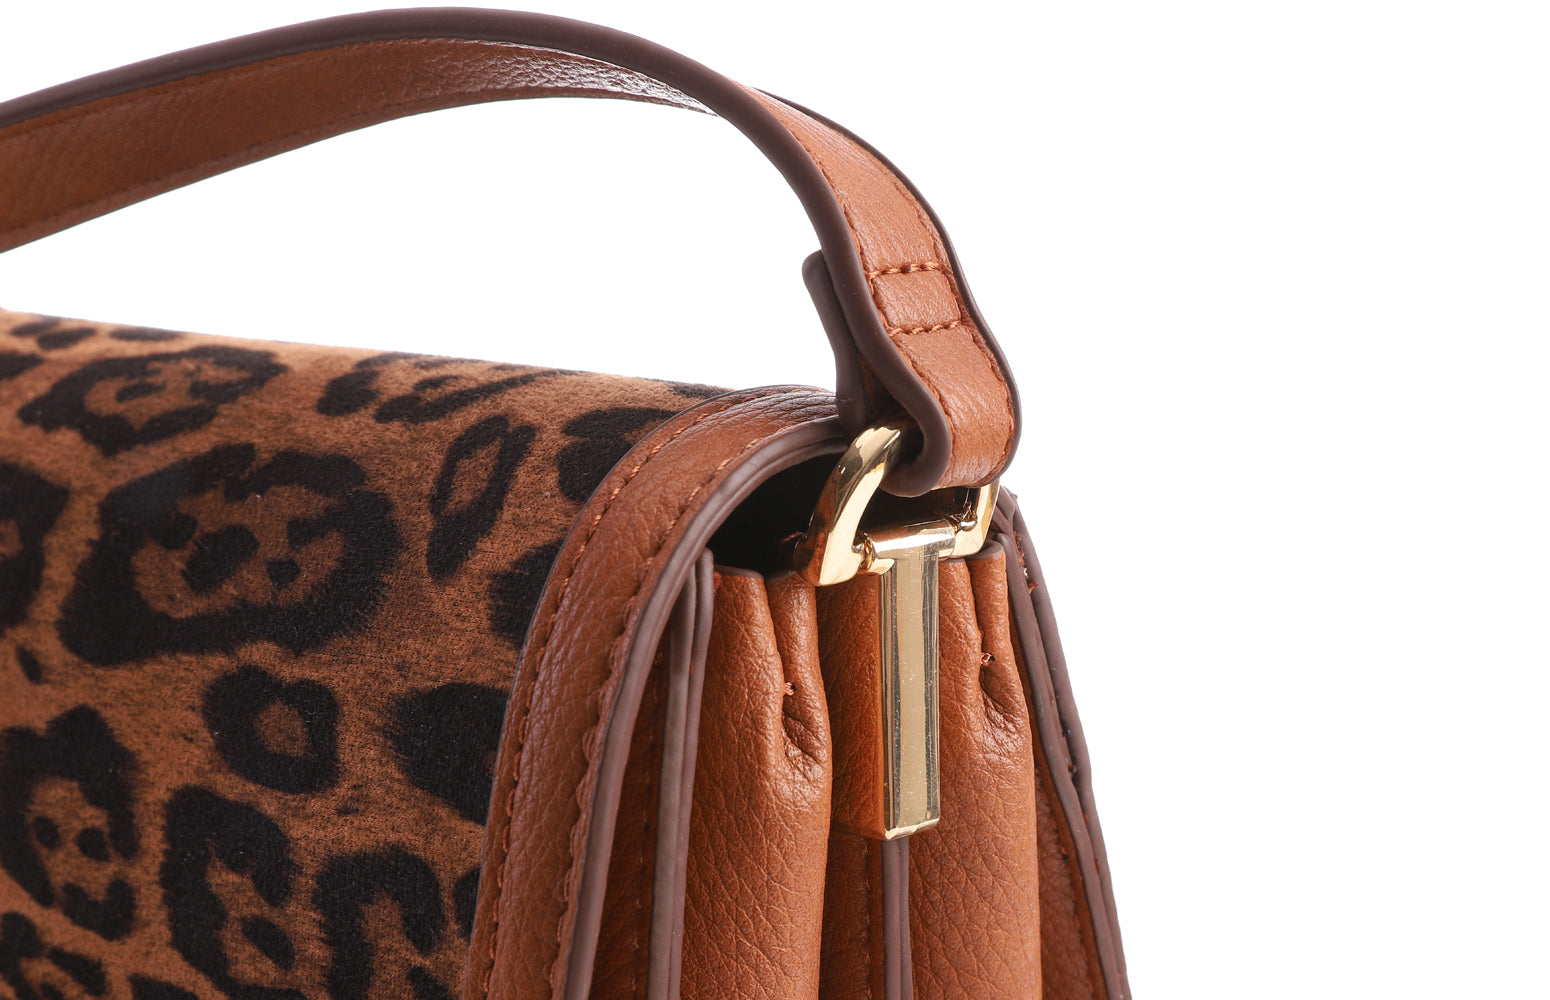 Feversole Crossbody Bag PU Leather Women Retro Small Saddle Satchel Shoulder Bag Tote With Long Adjustable Strap Camel Leopard